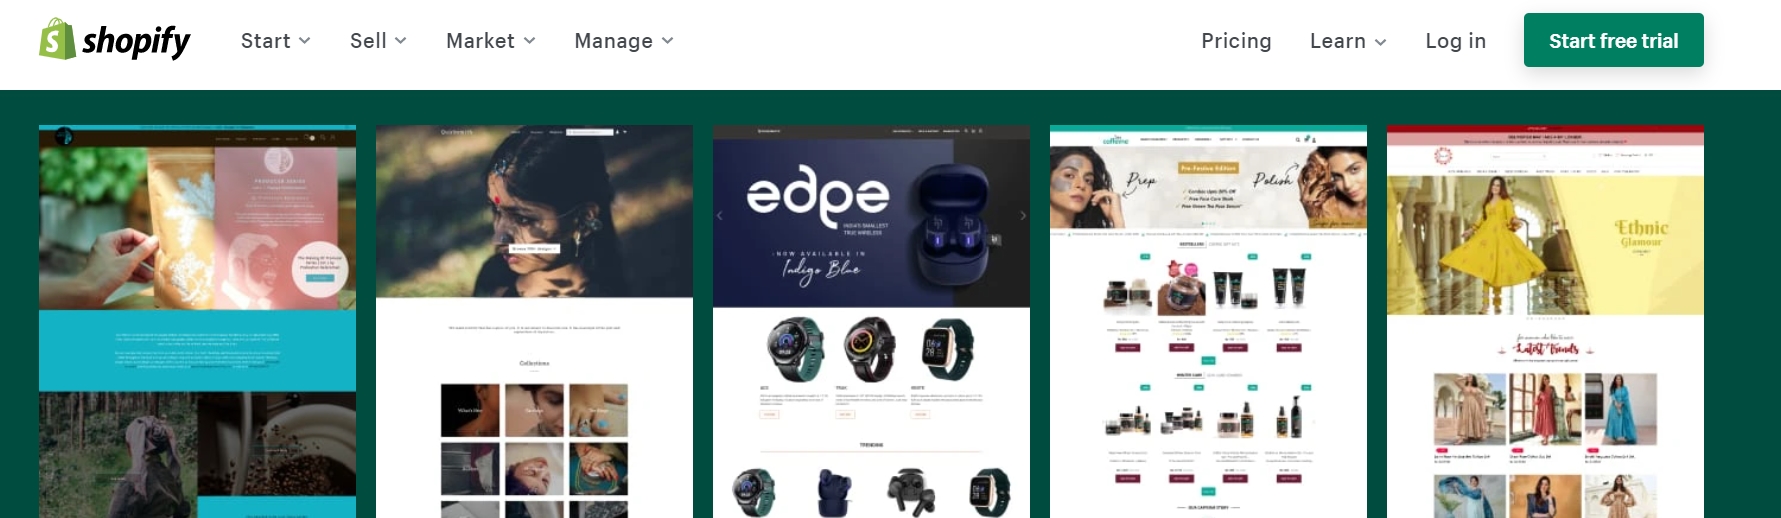 Shopify E-Commerce Platform